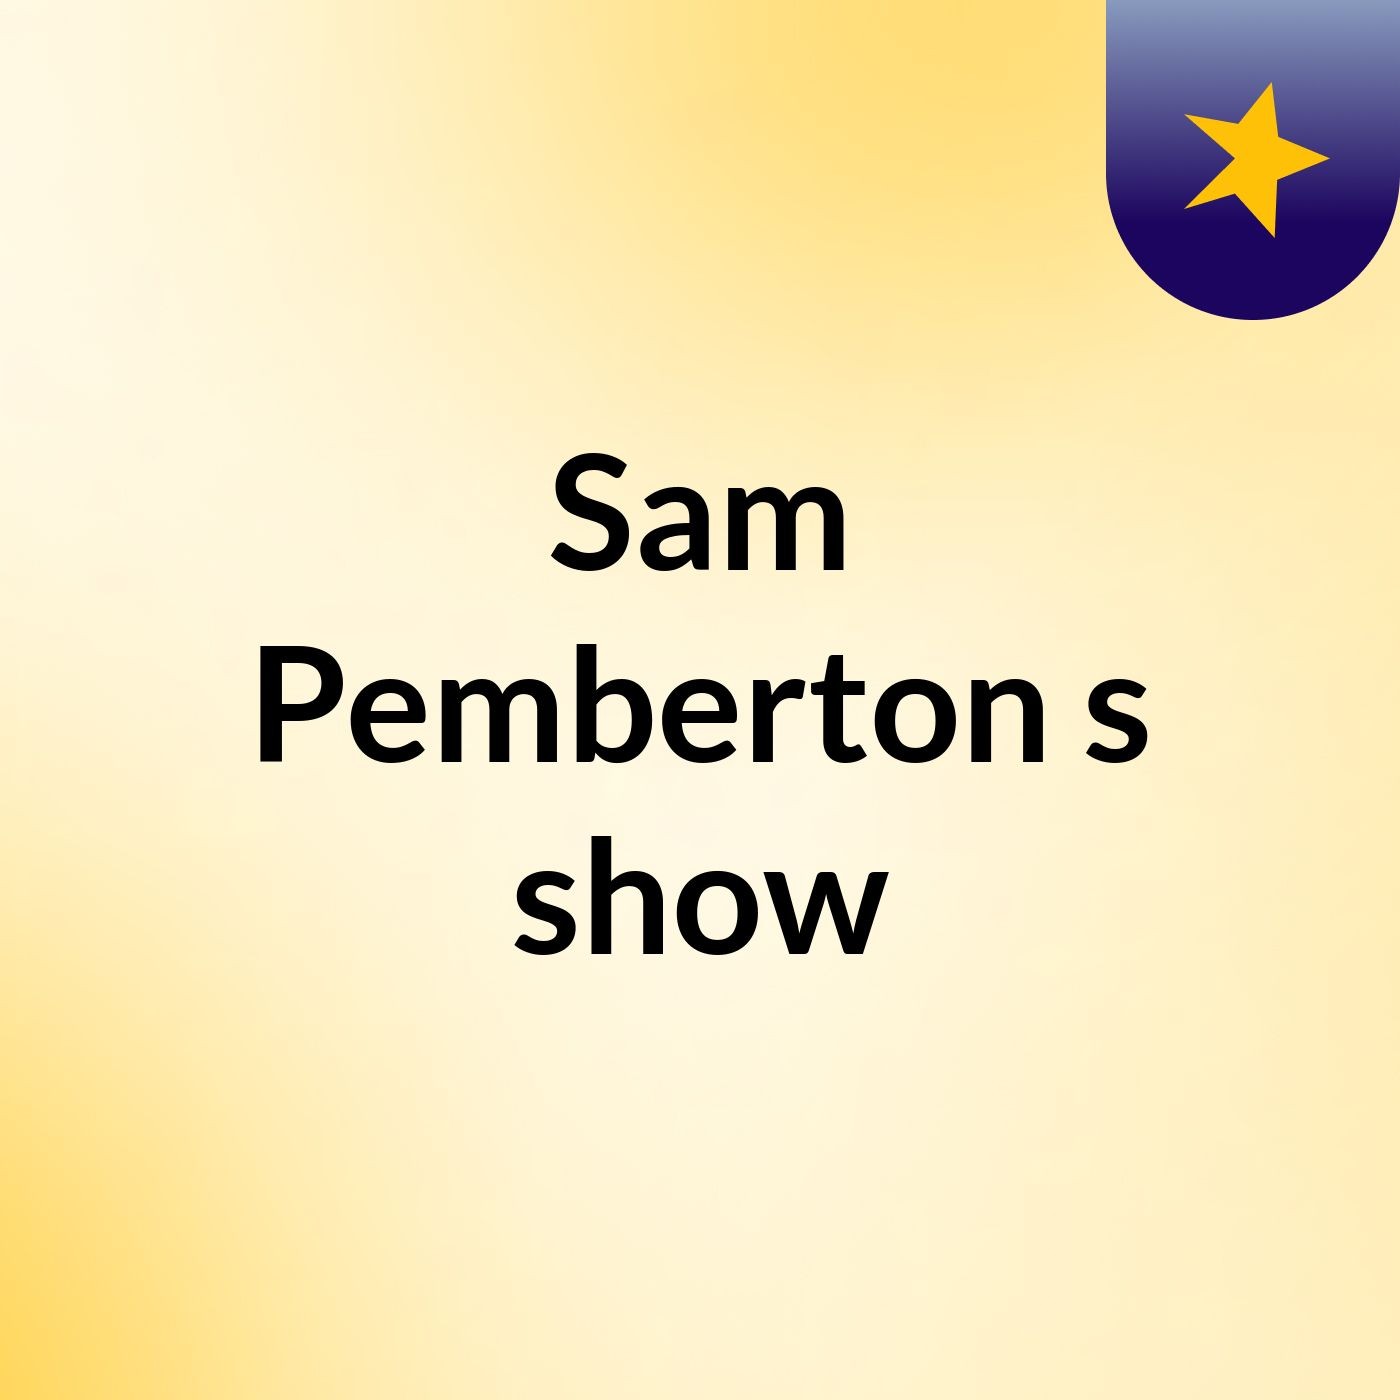 Sam Pemberton's show